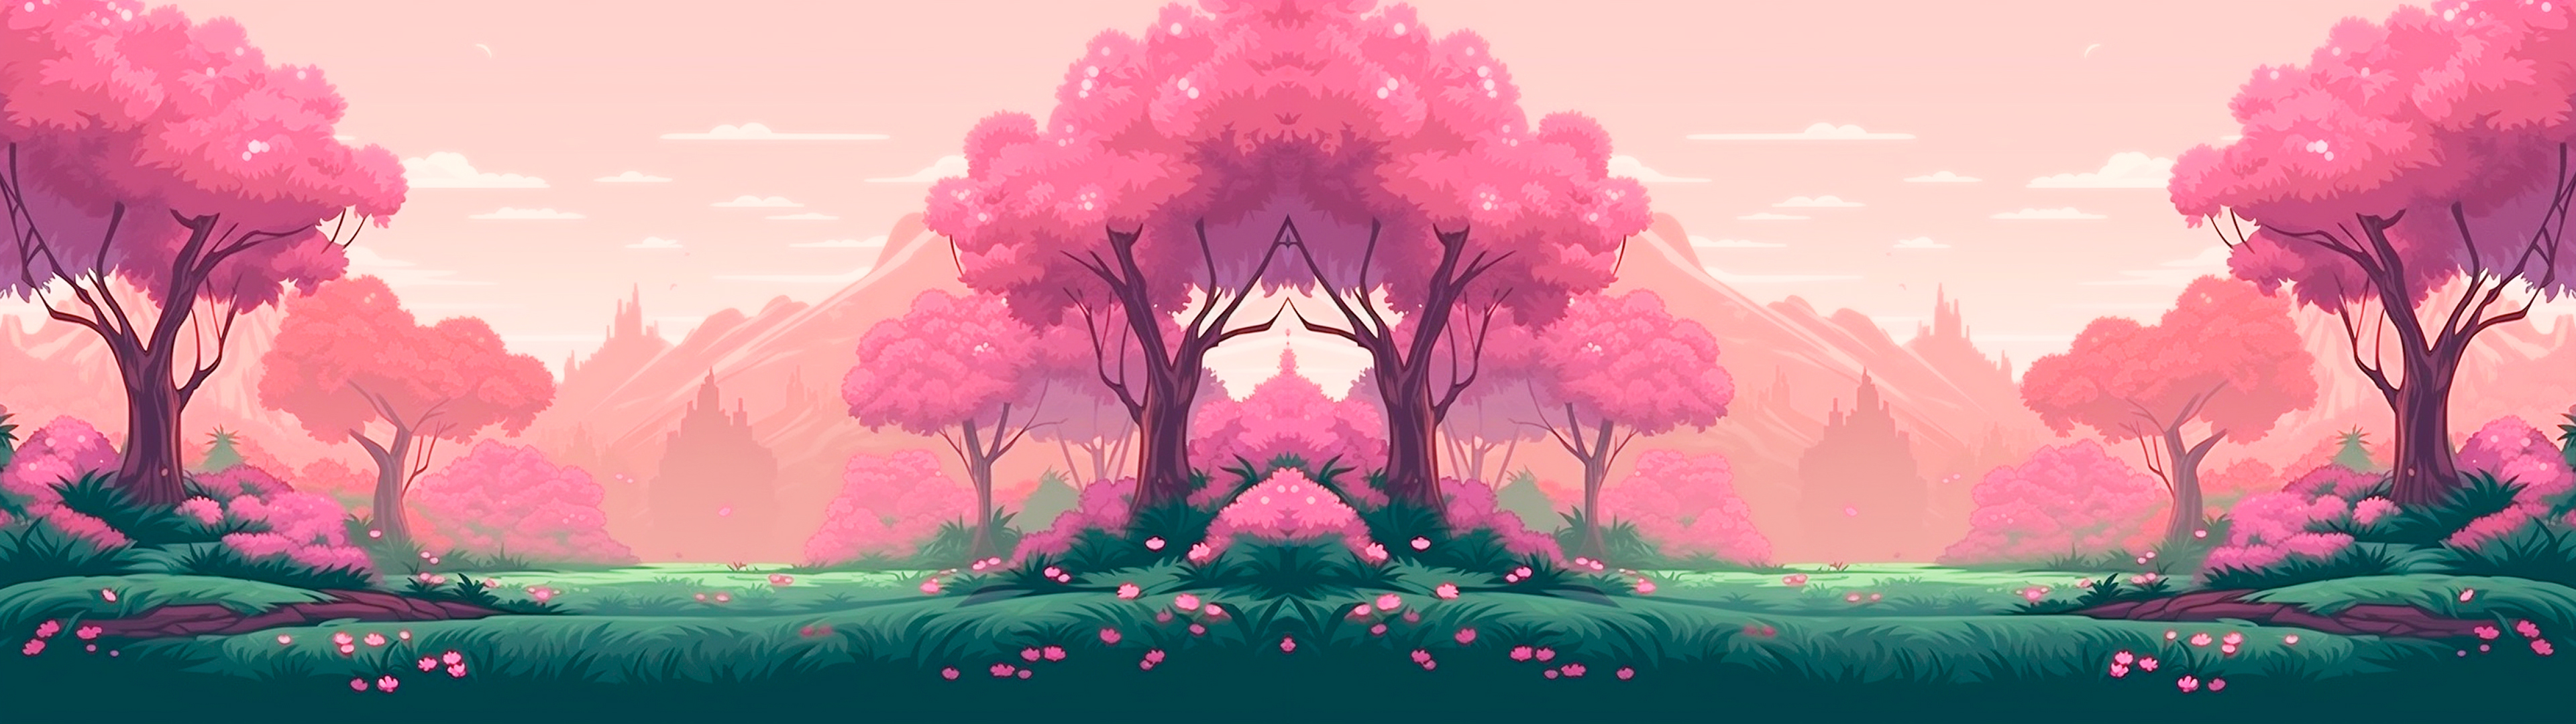 Cherry Blossom Forest Tiled Background